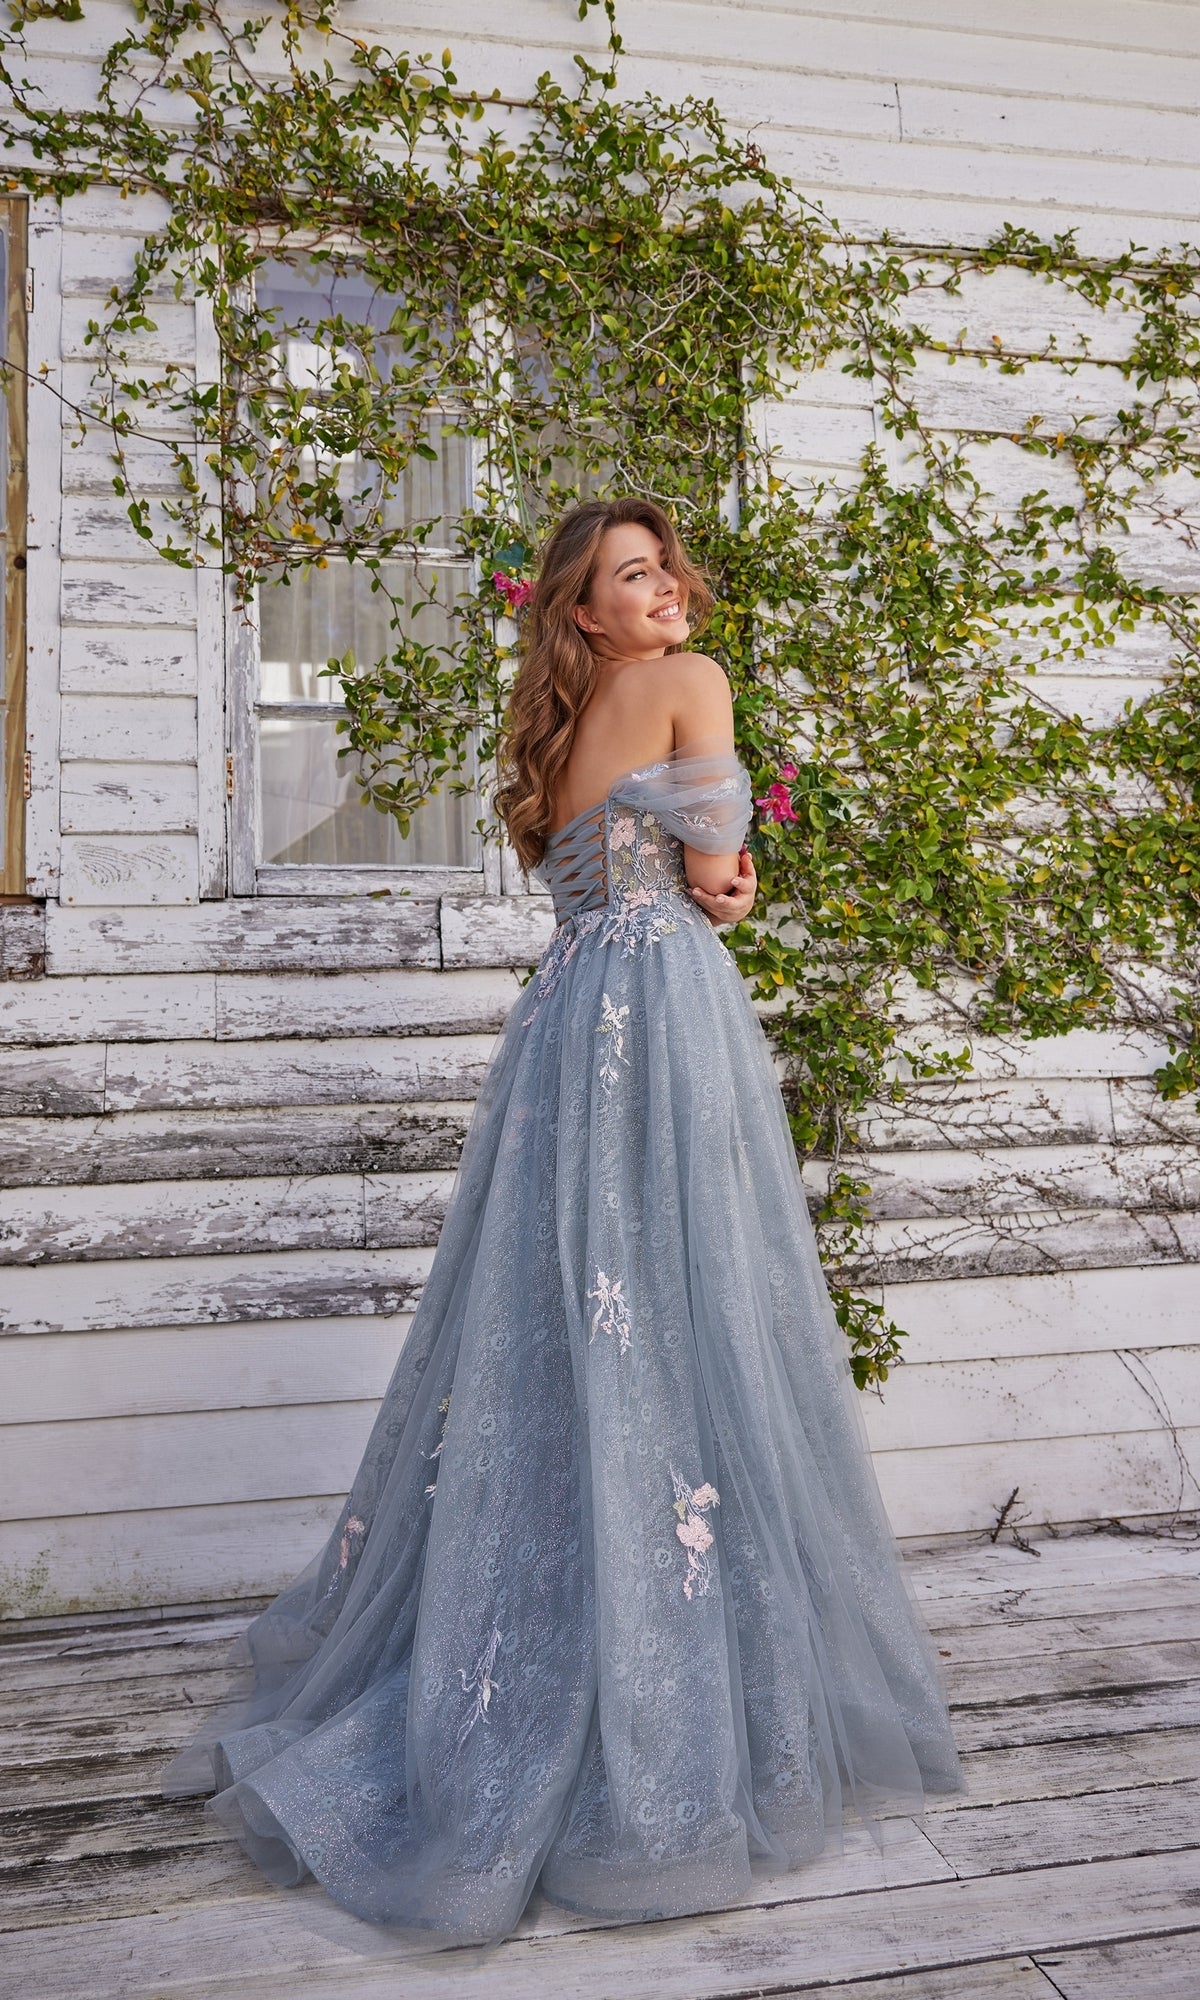 Colette Off-the-Shoulder Lace Prom Dress CL5169